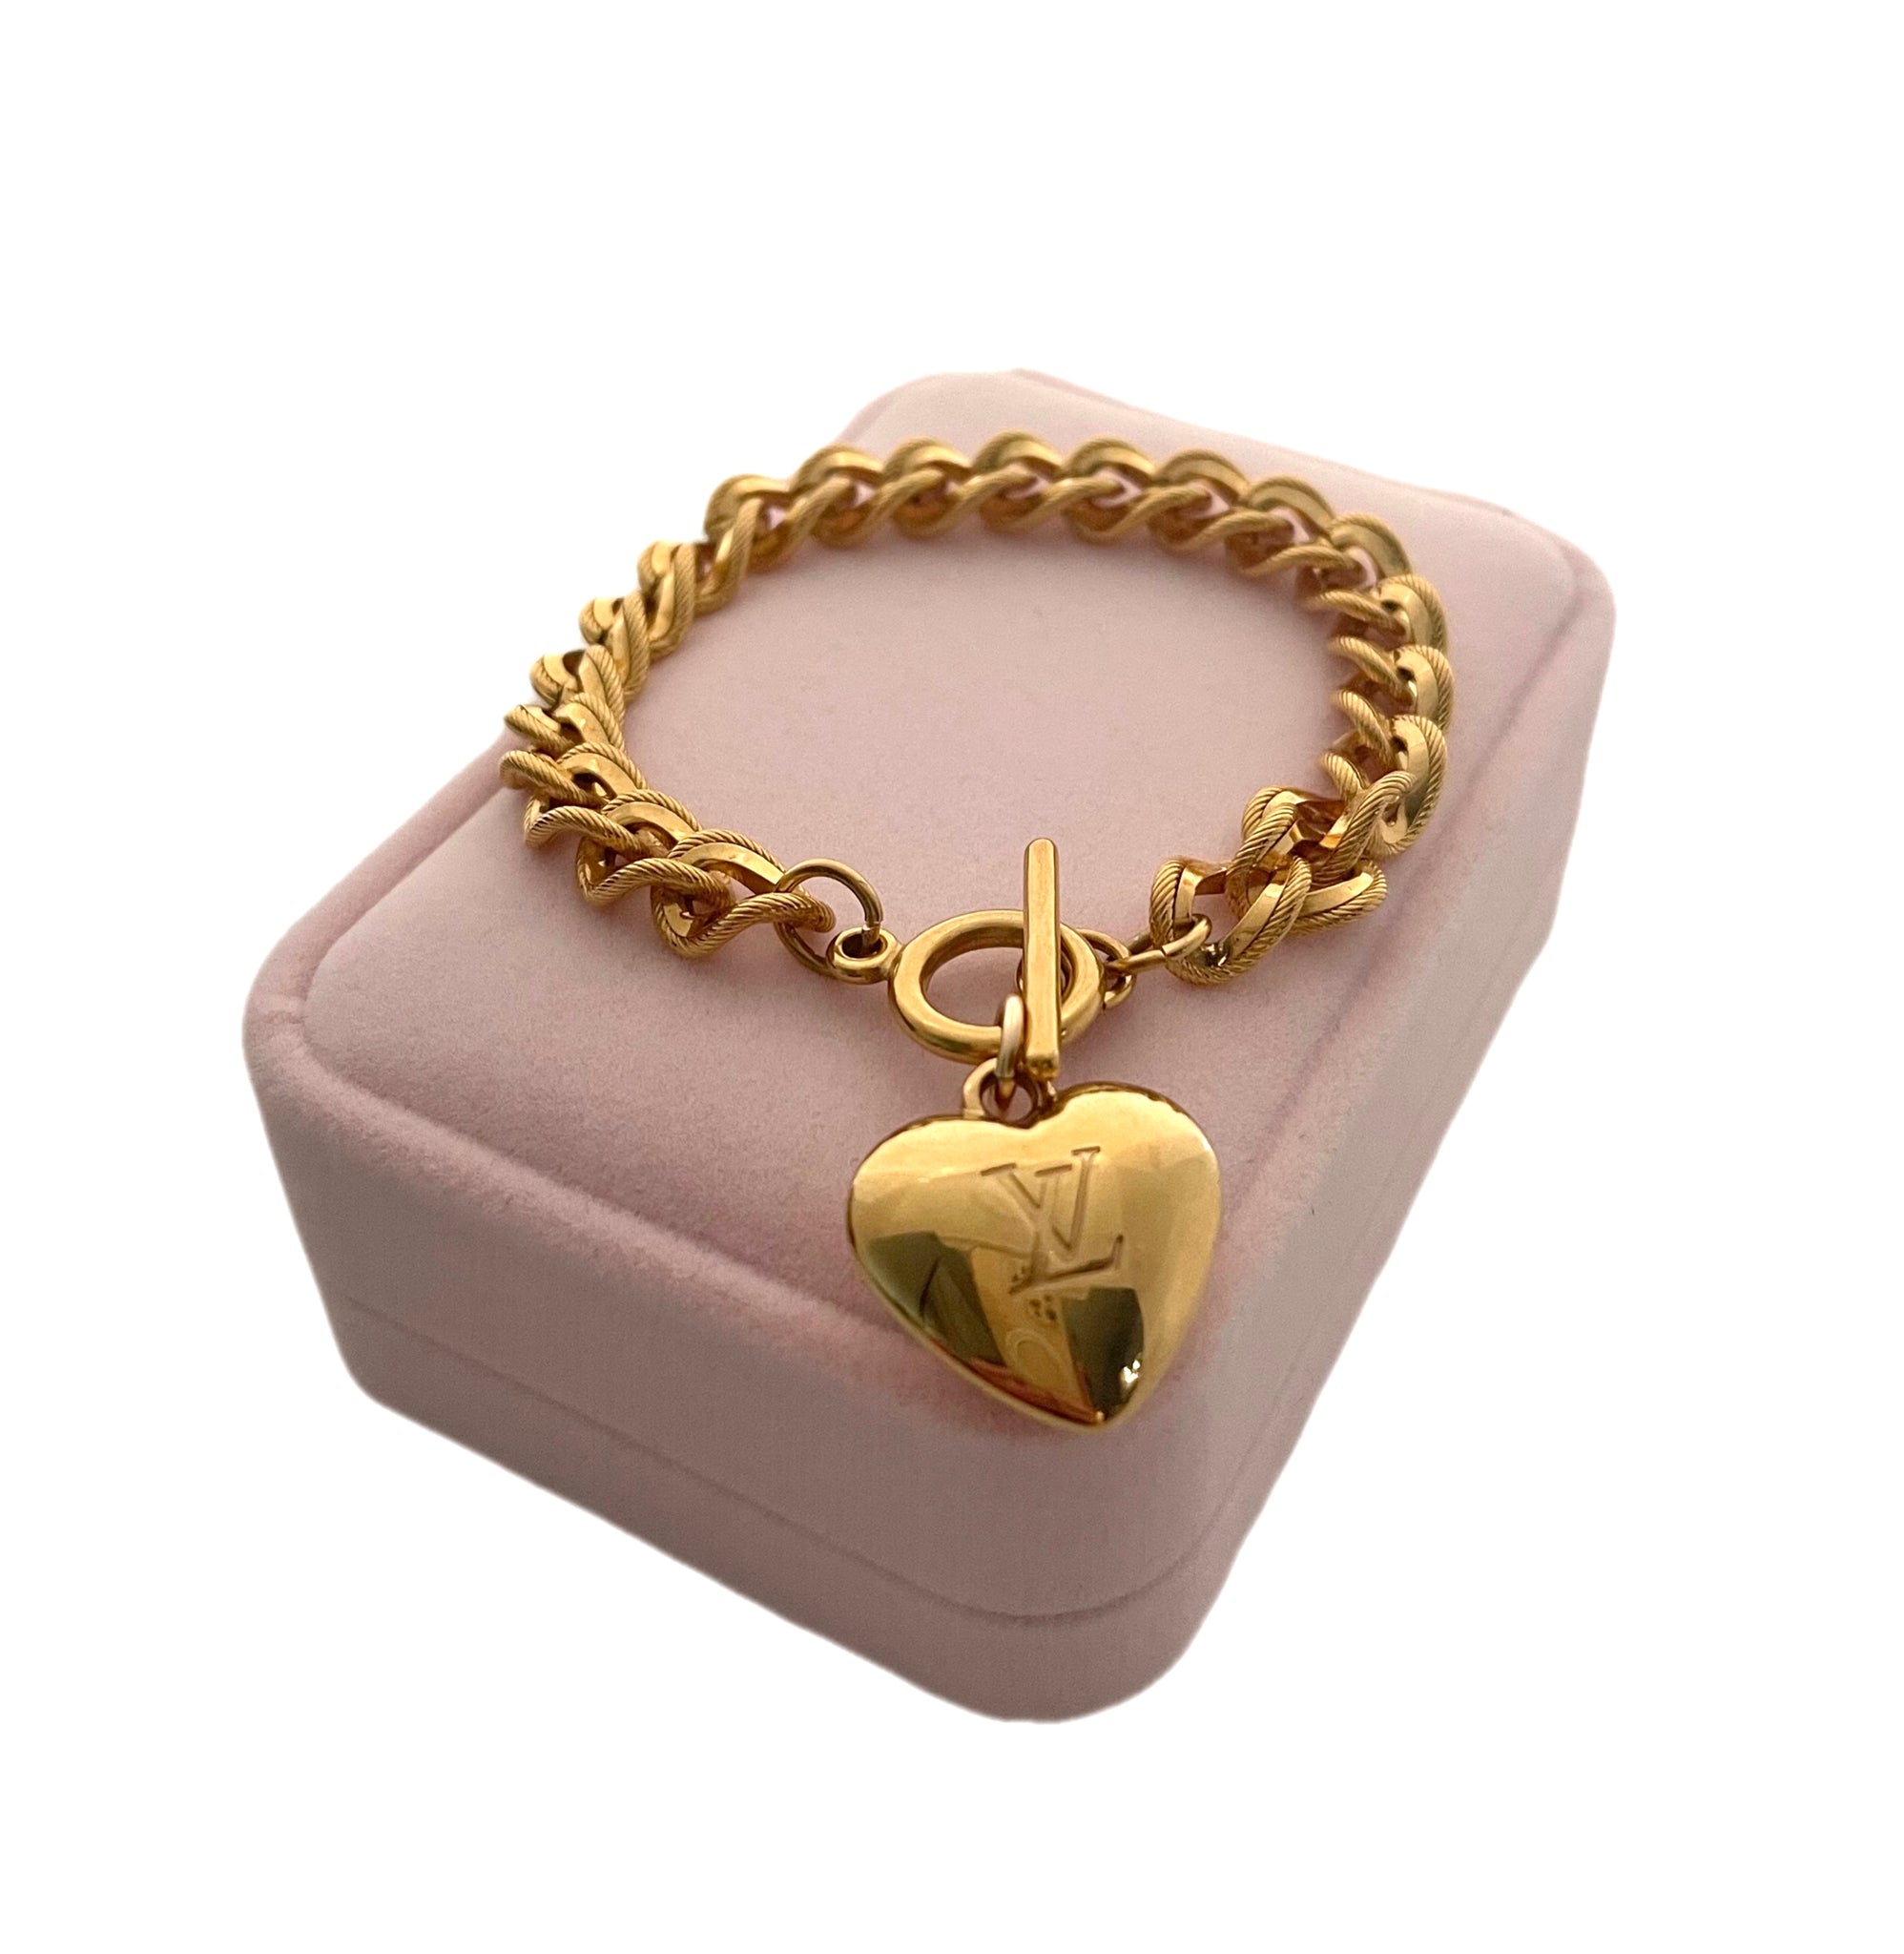 Vintage Louis Vuitton Yellow Gold Link Bracelet w/ Charms, Bracelets